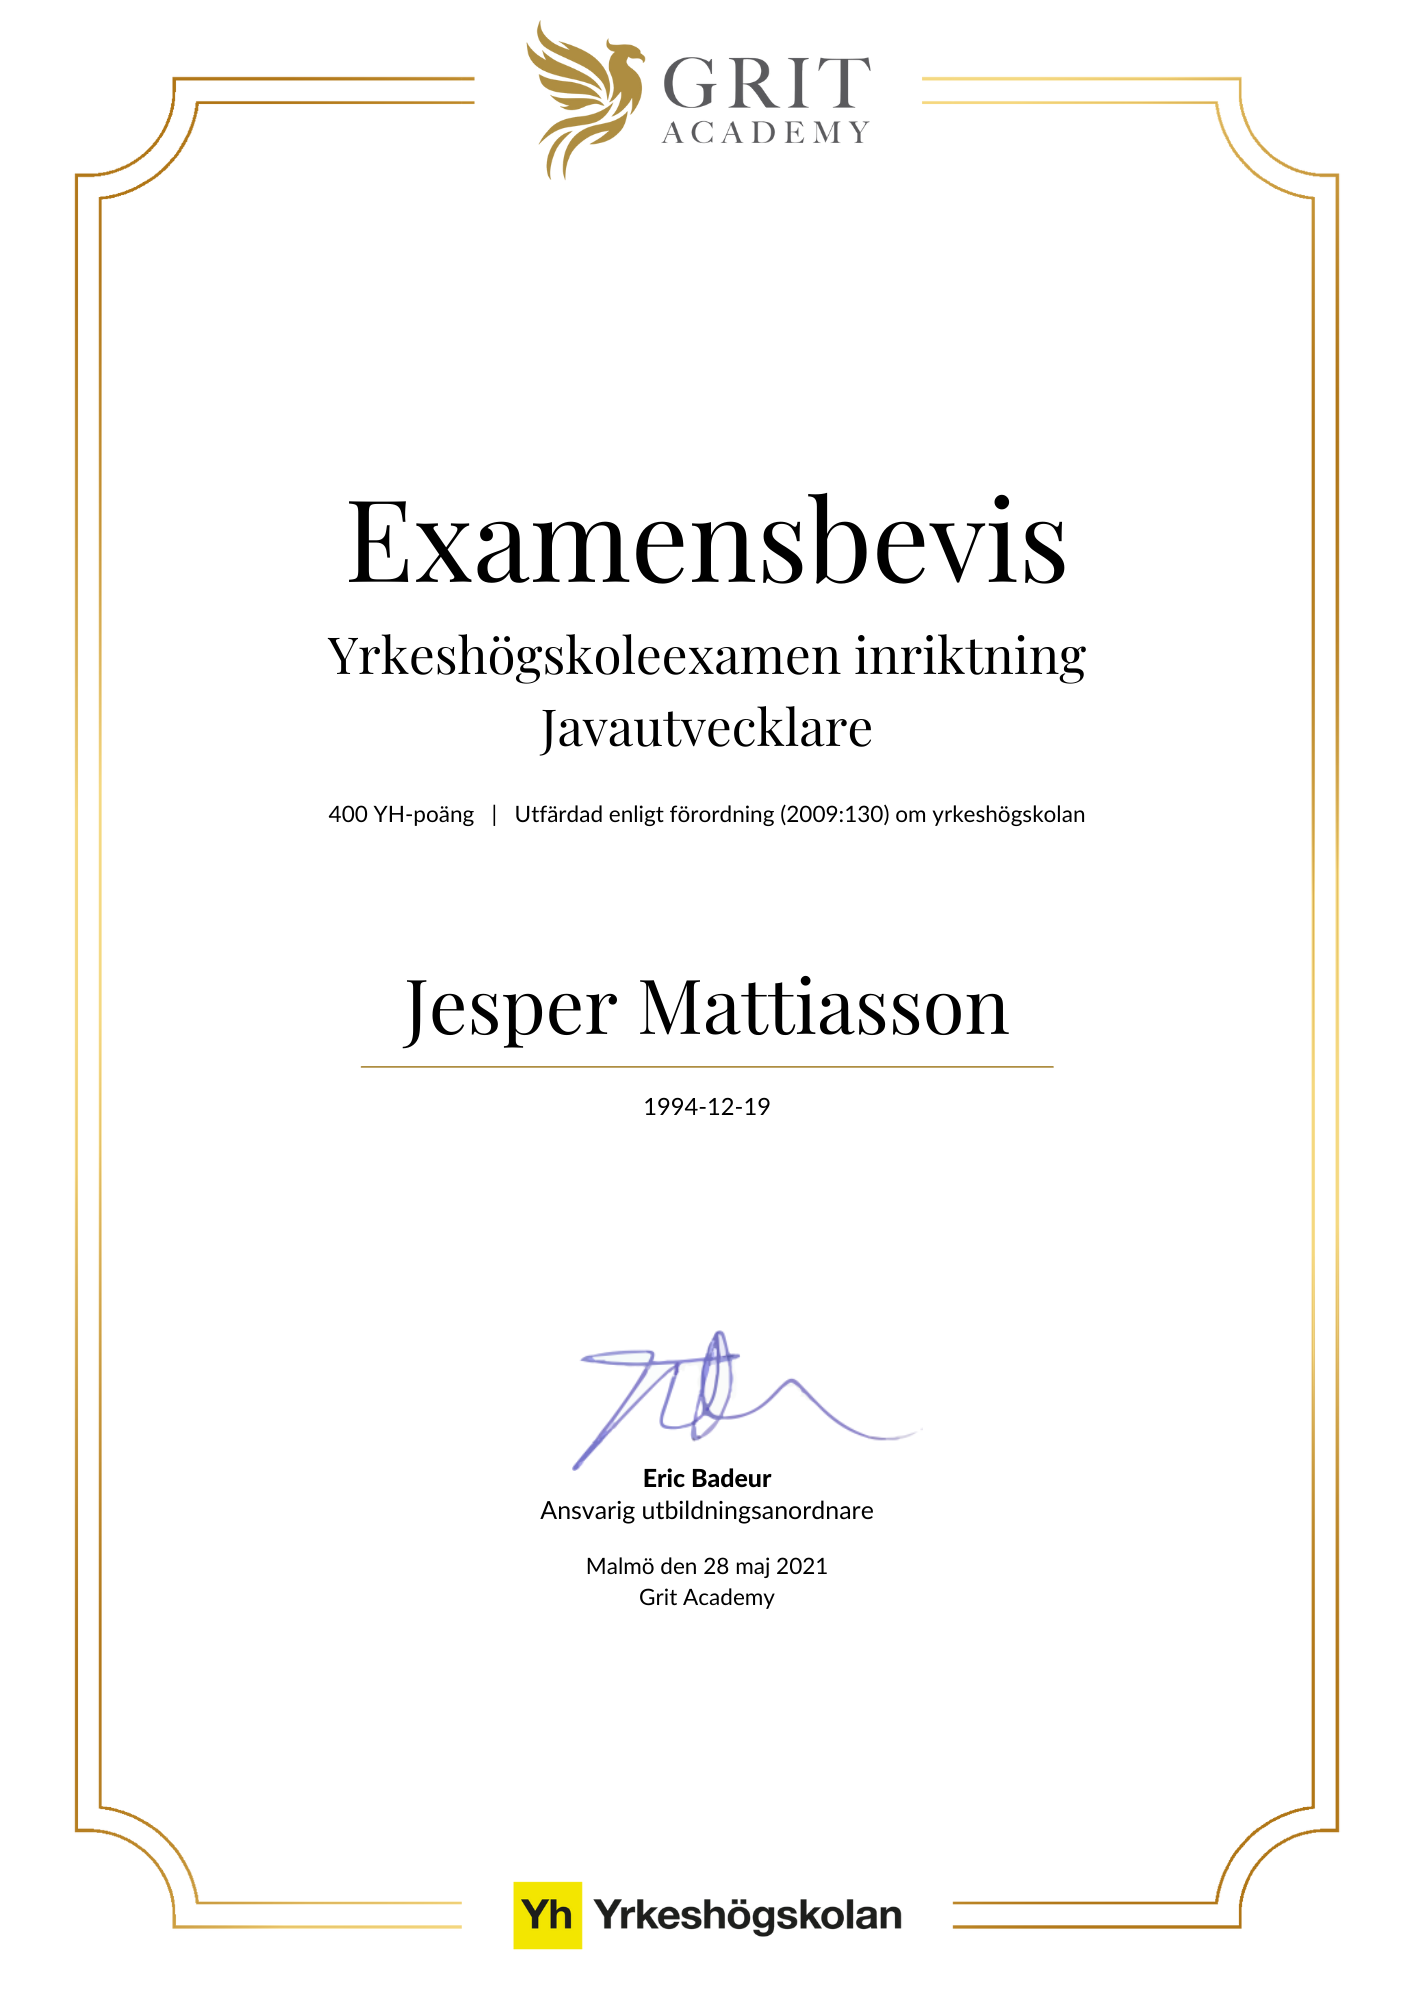 Examensbevis Jesper Mattiasson - 1